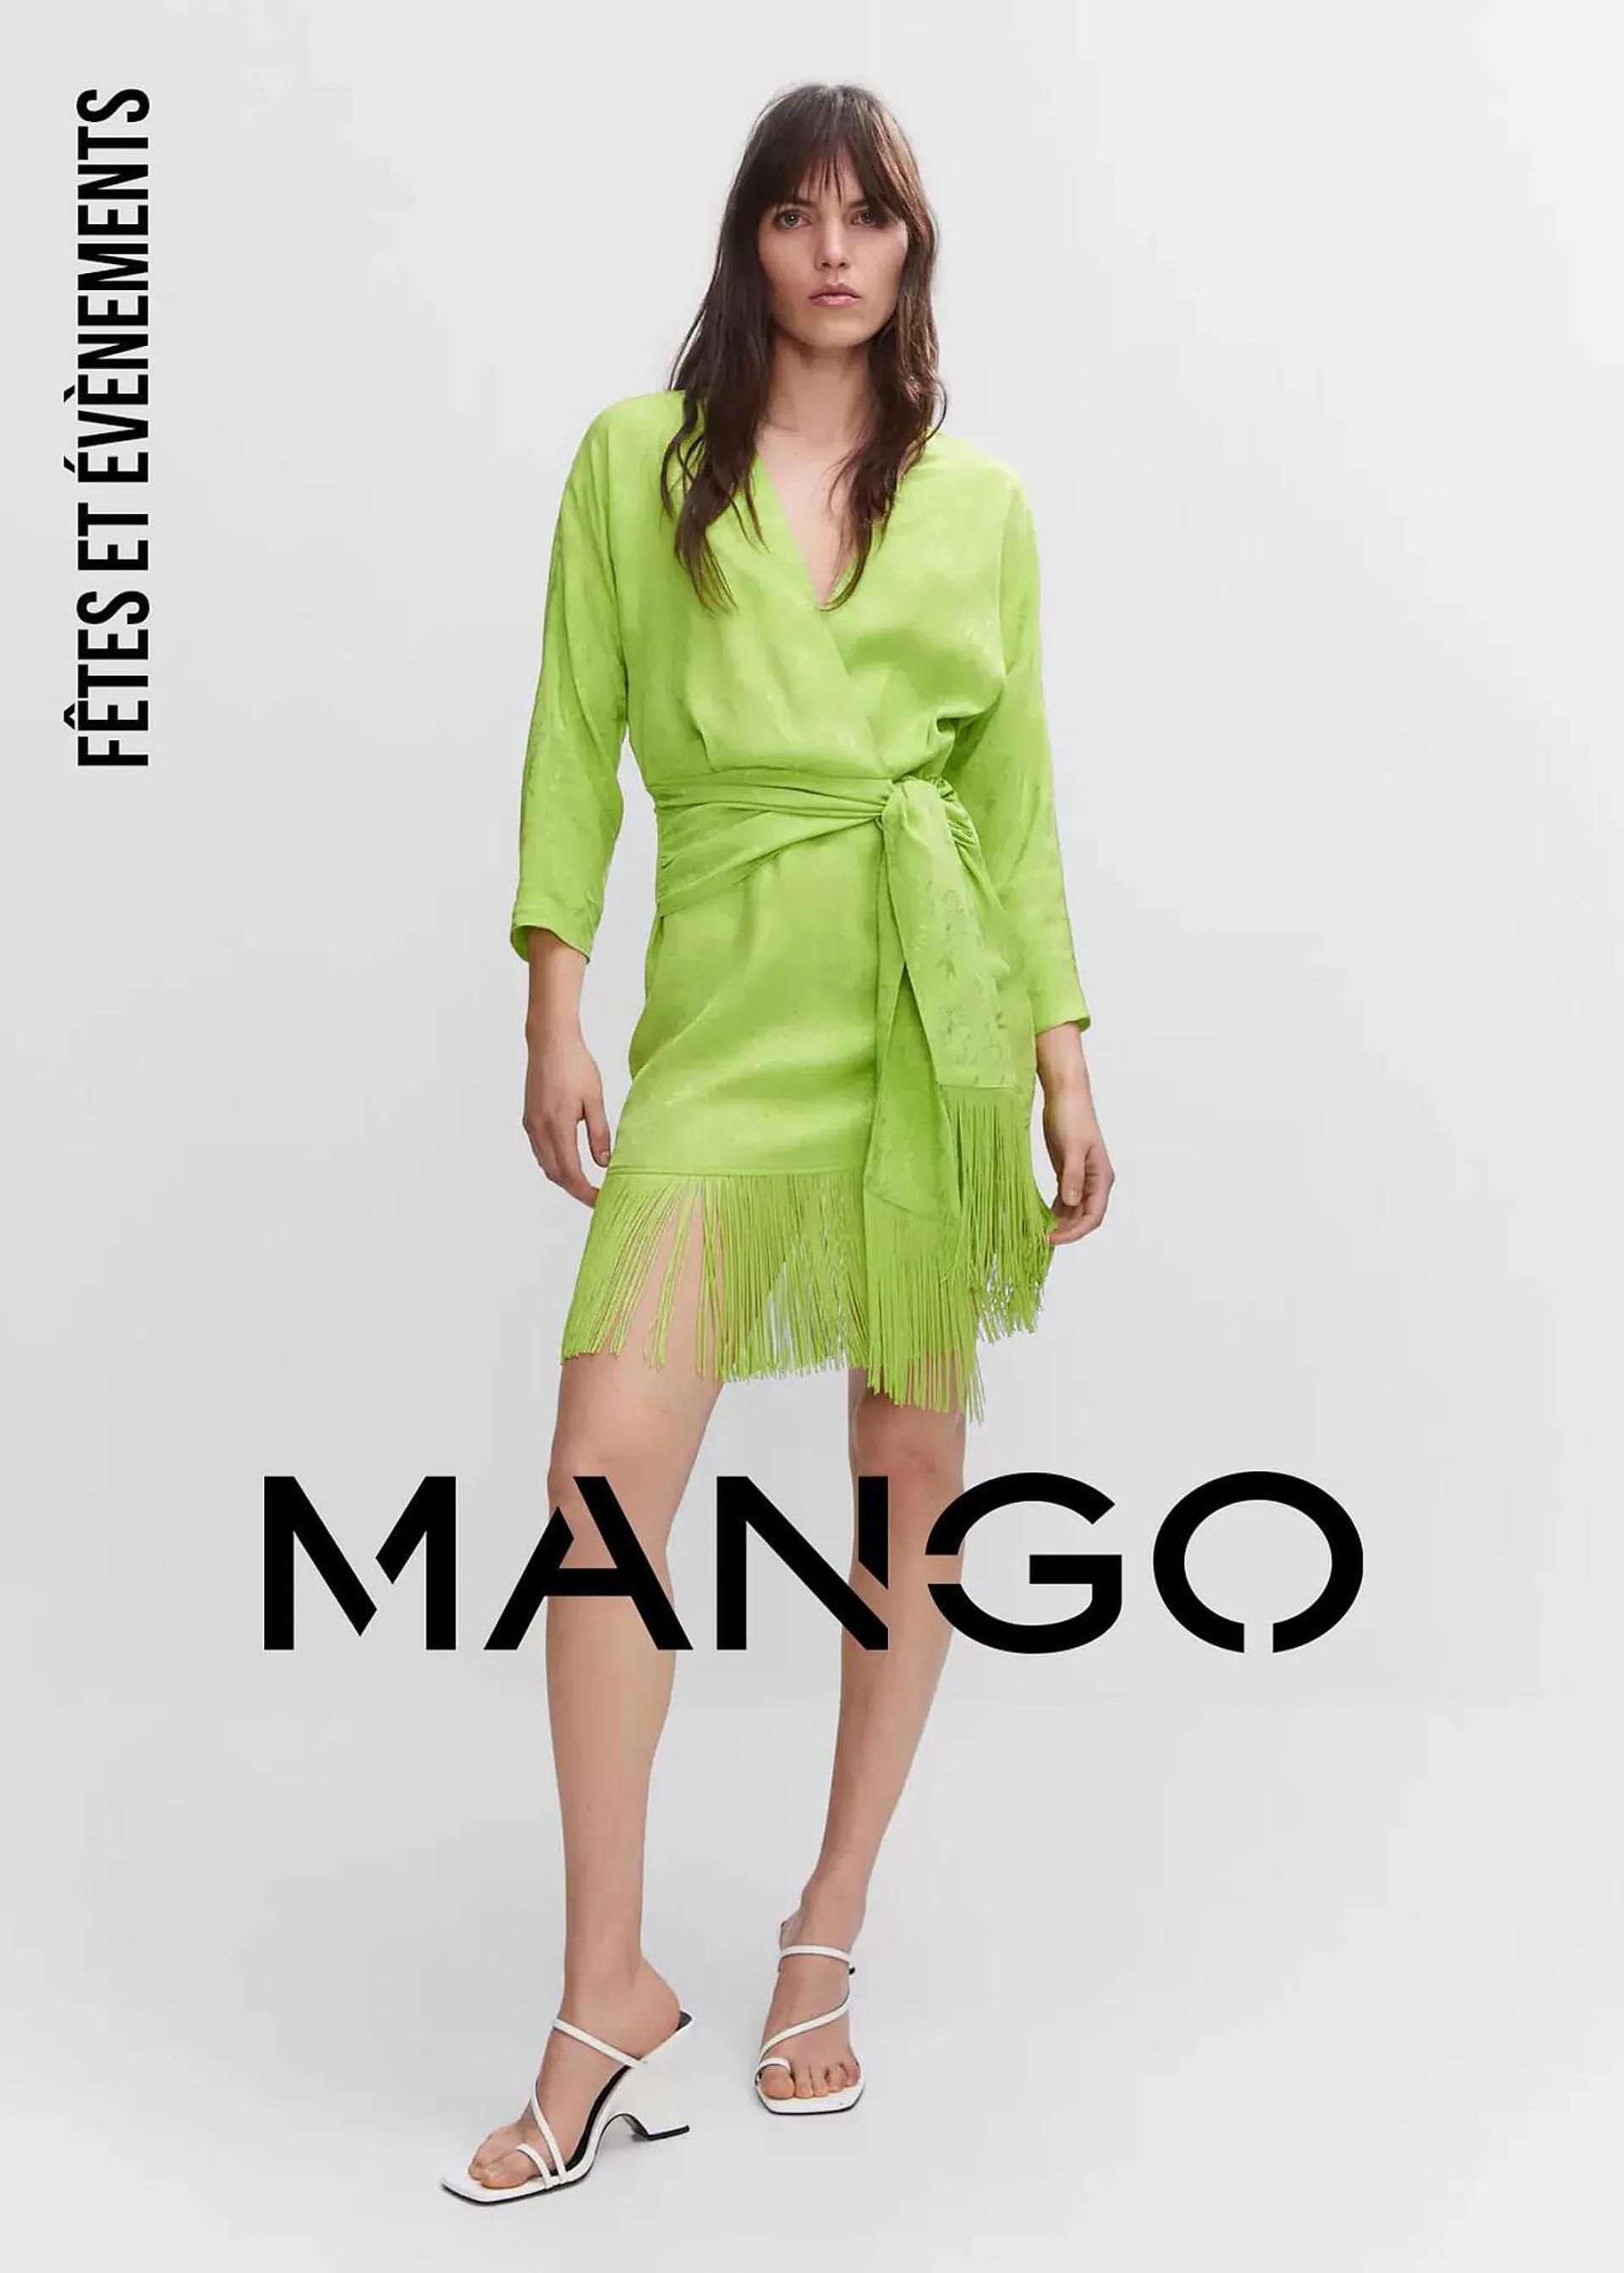 Catalogue Mango - 1